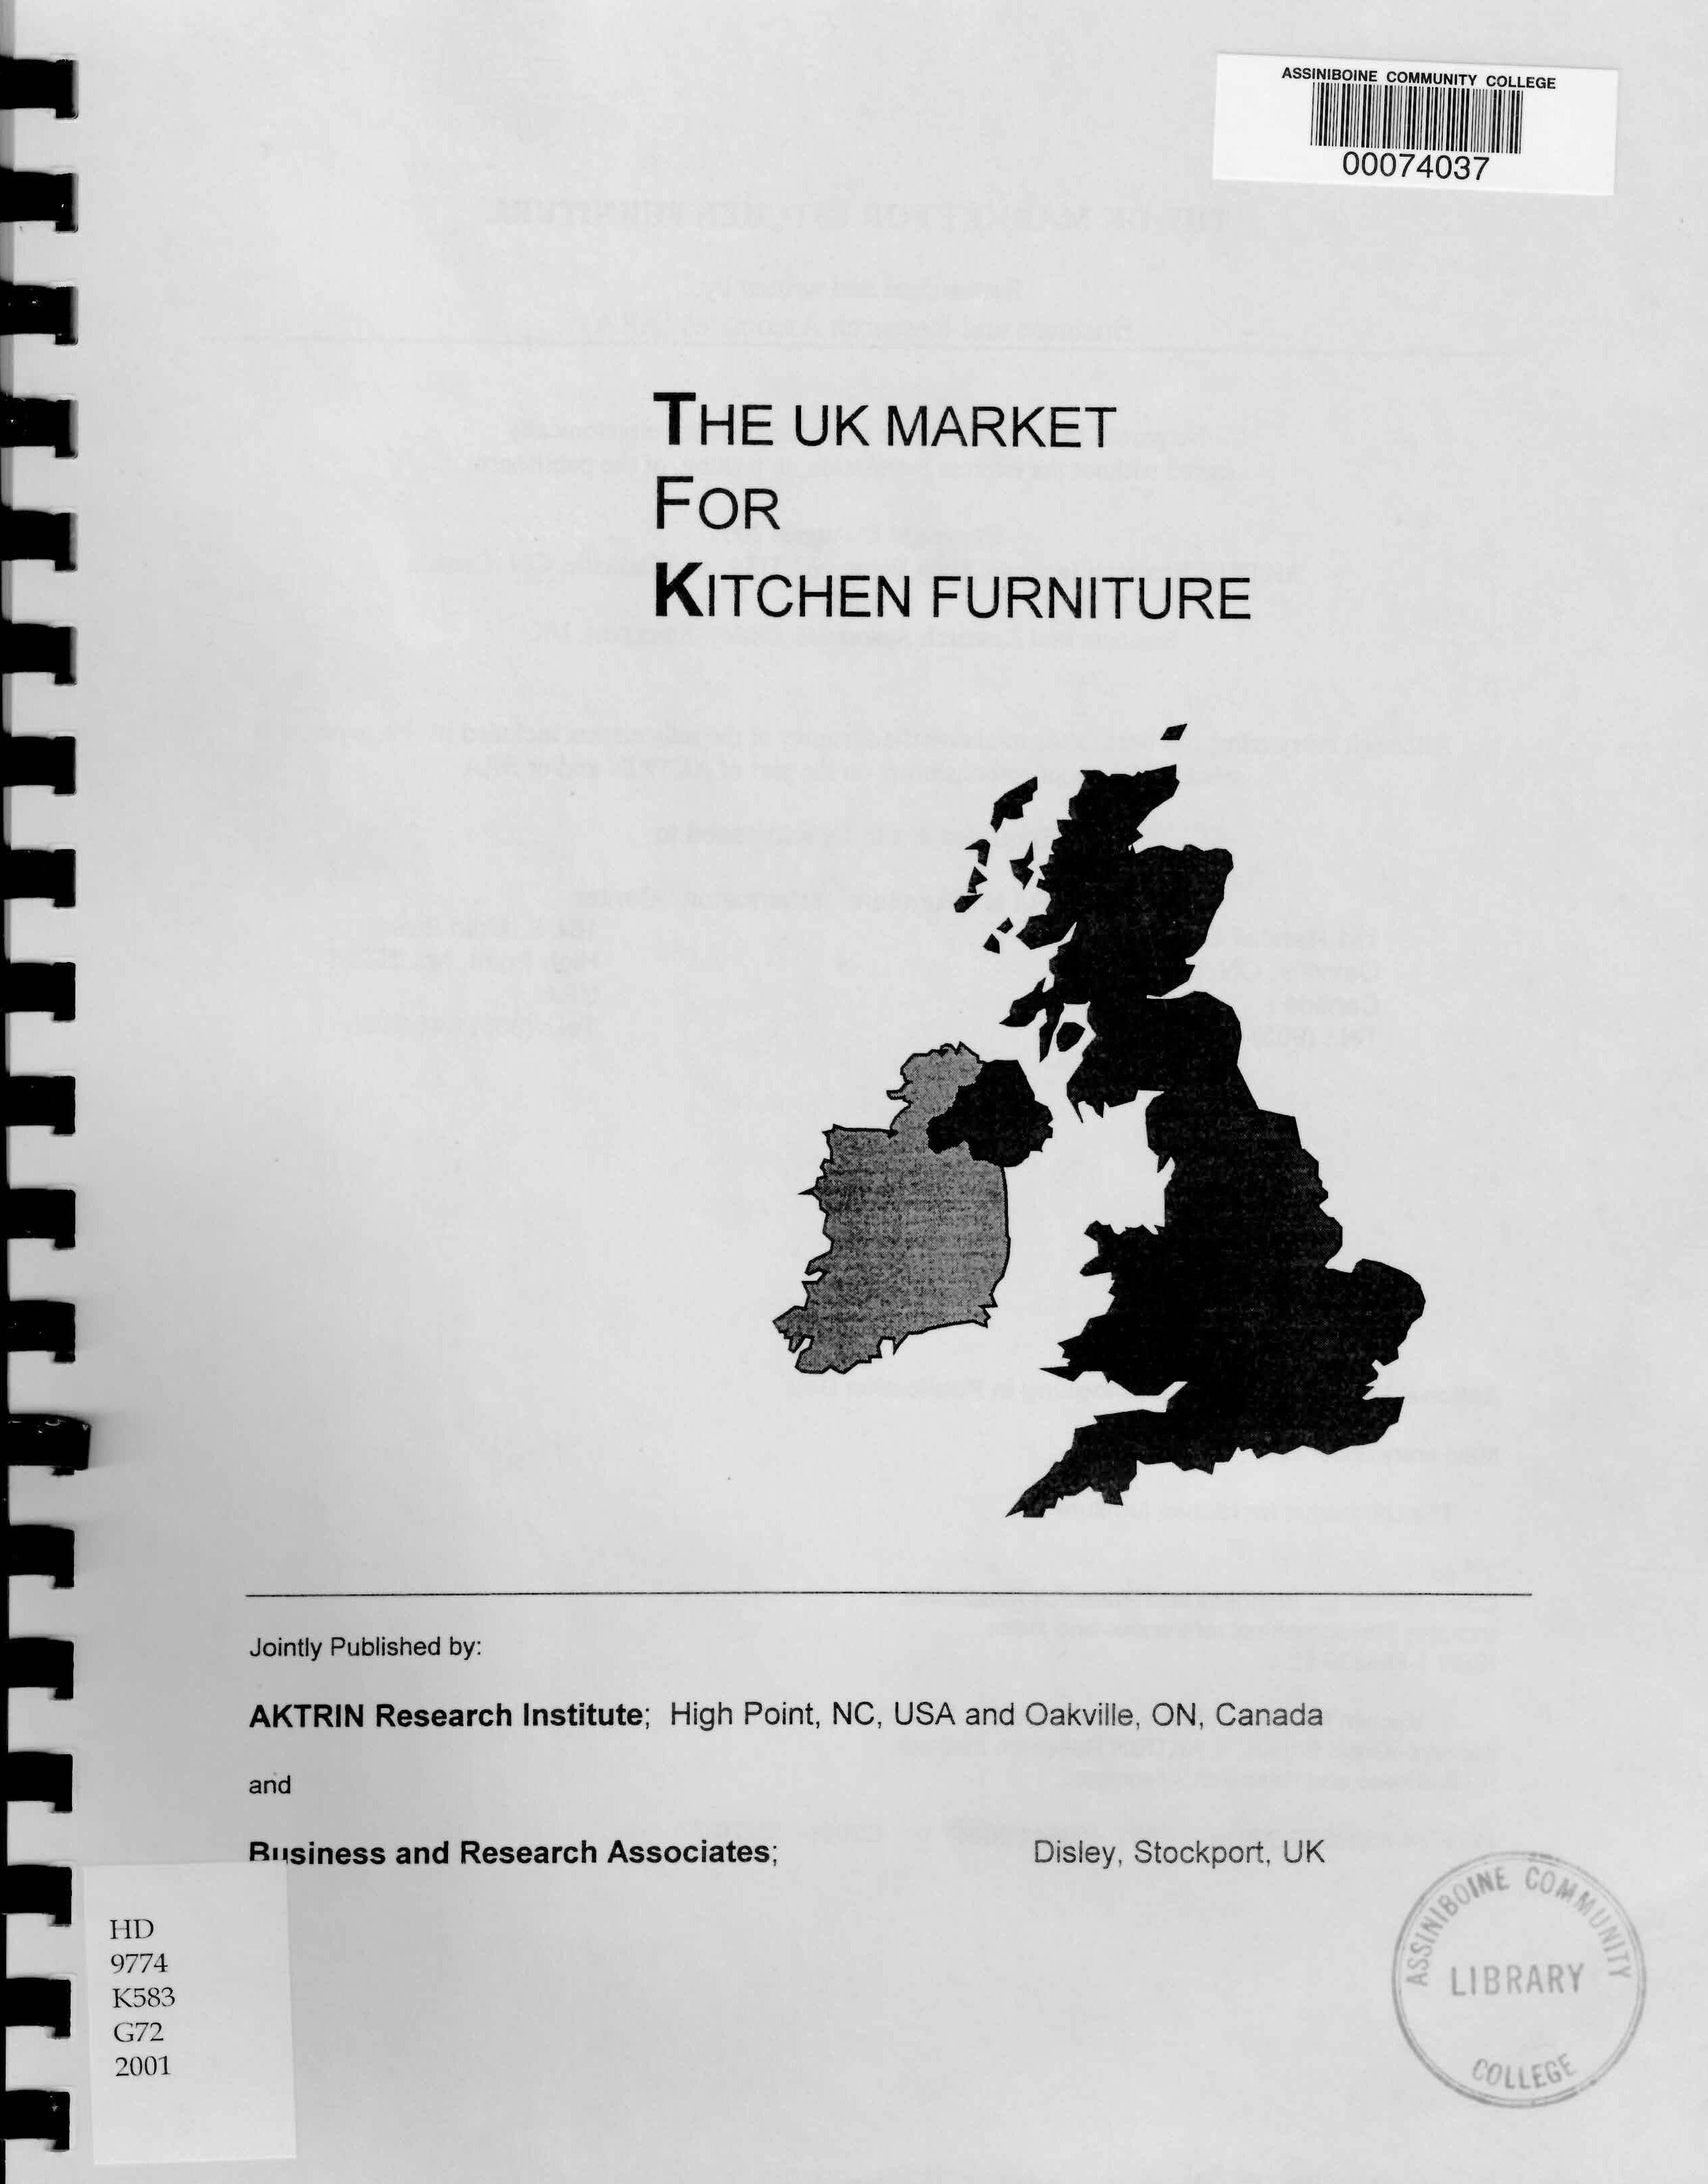 The UK market for kitchen furniture